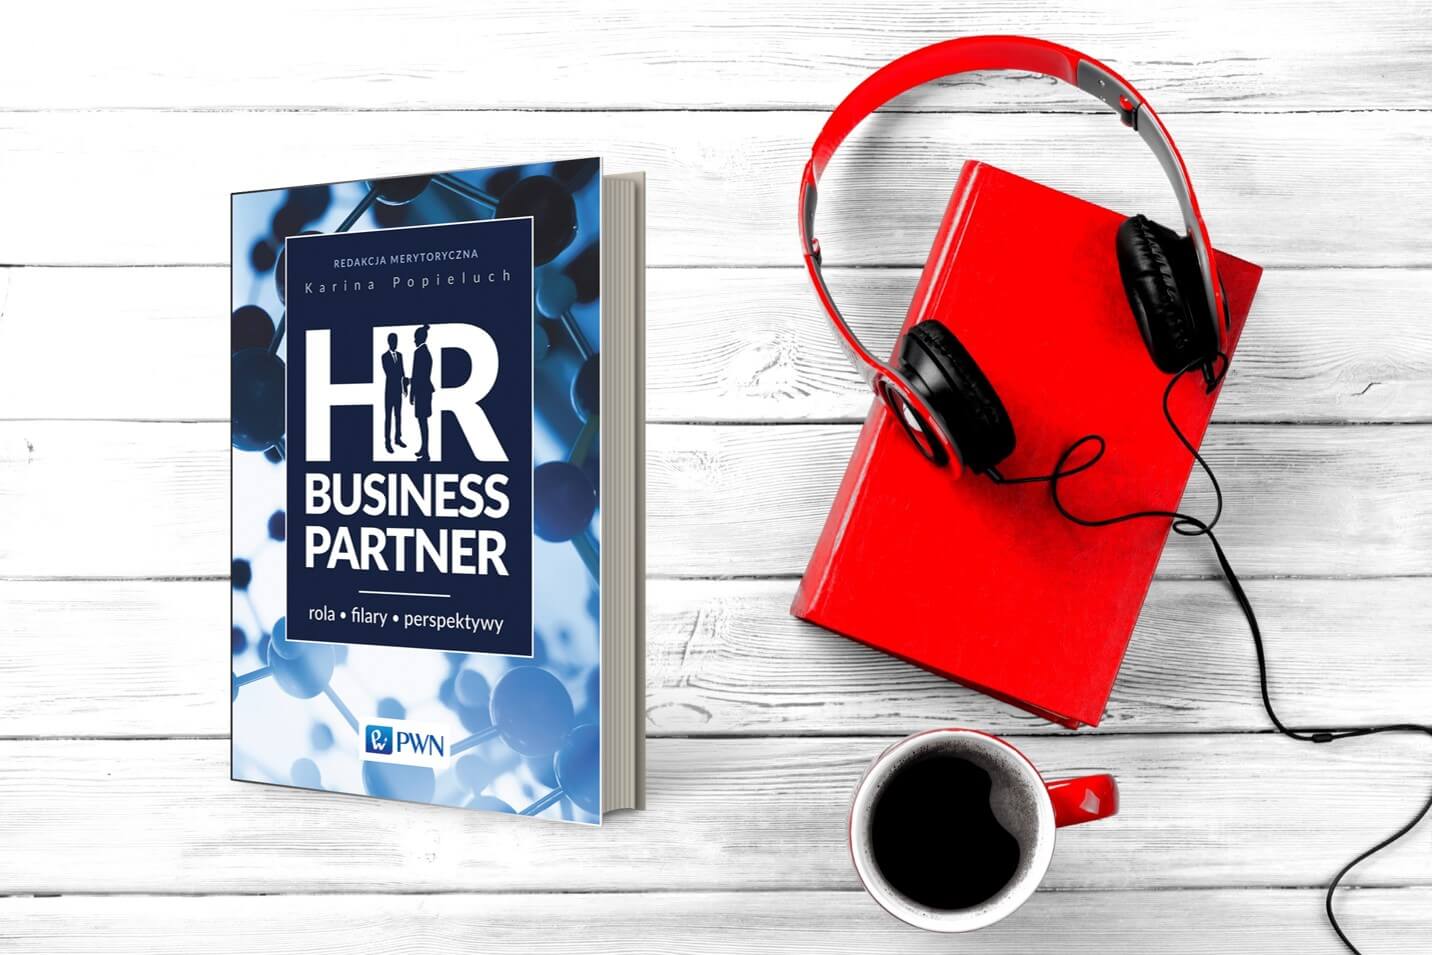 HR Business Partner - rola, filary, perspektywy